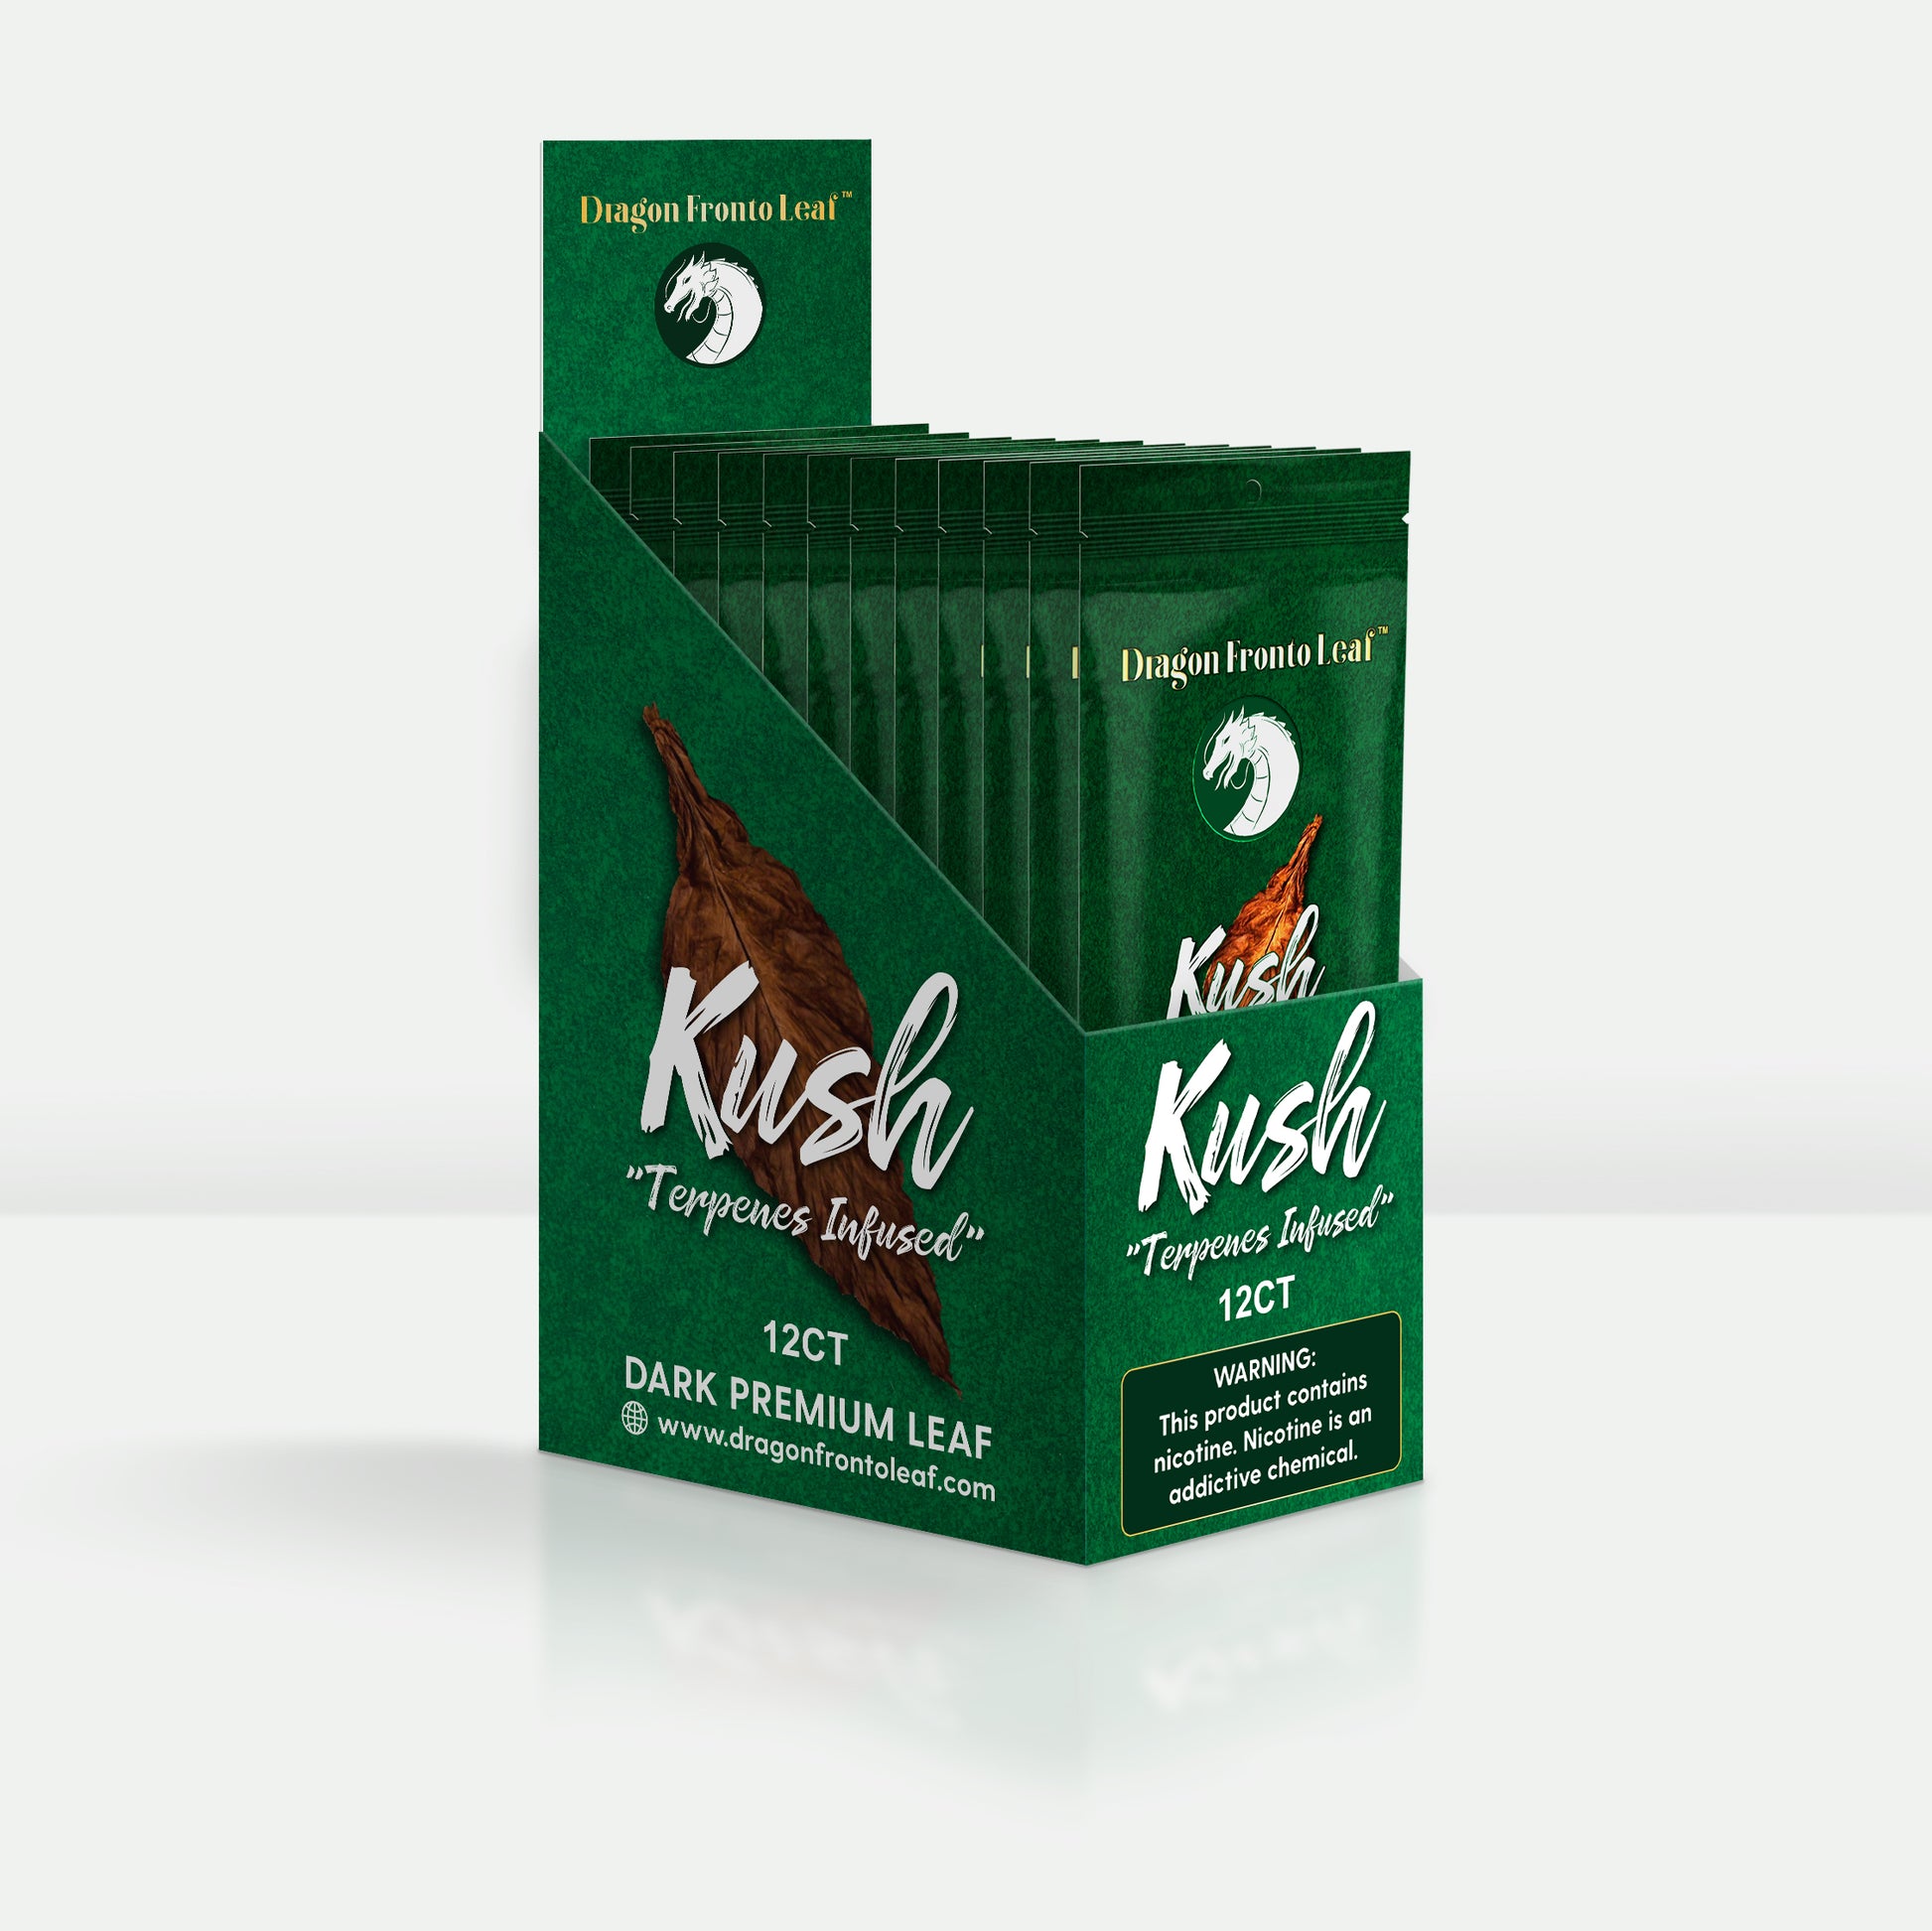 Kush Dragon Fronto Leaf Dark Premium Tobacco Leaf Opened Box